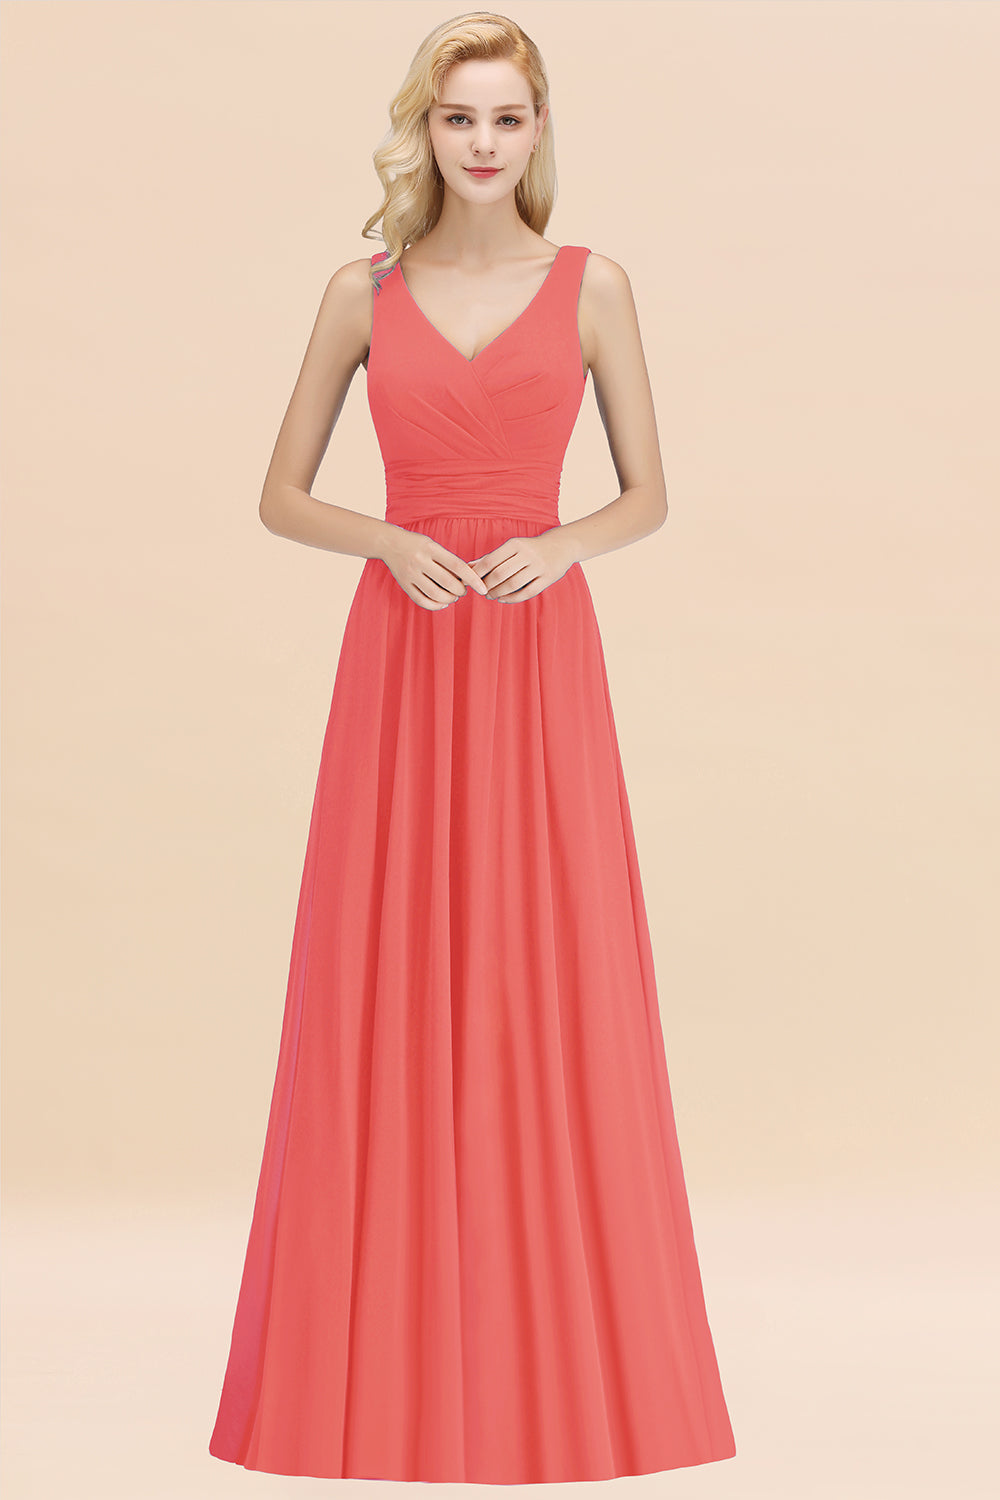 Modest Sleeveless V-Neck Long Chiffon Bridesmaid Dress Online with Ruffle-27dress